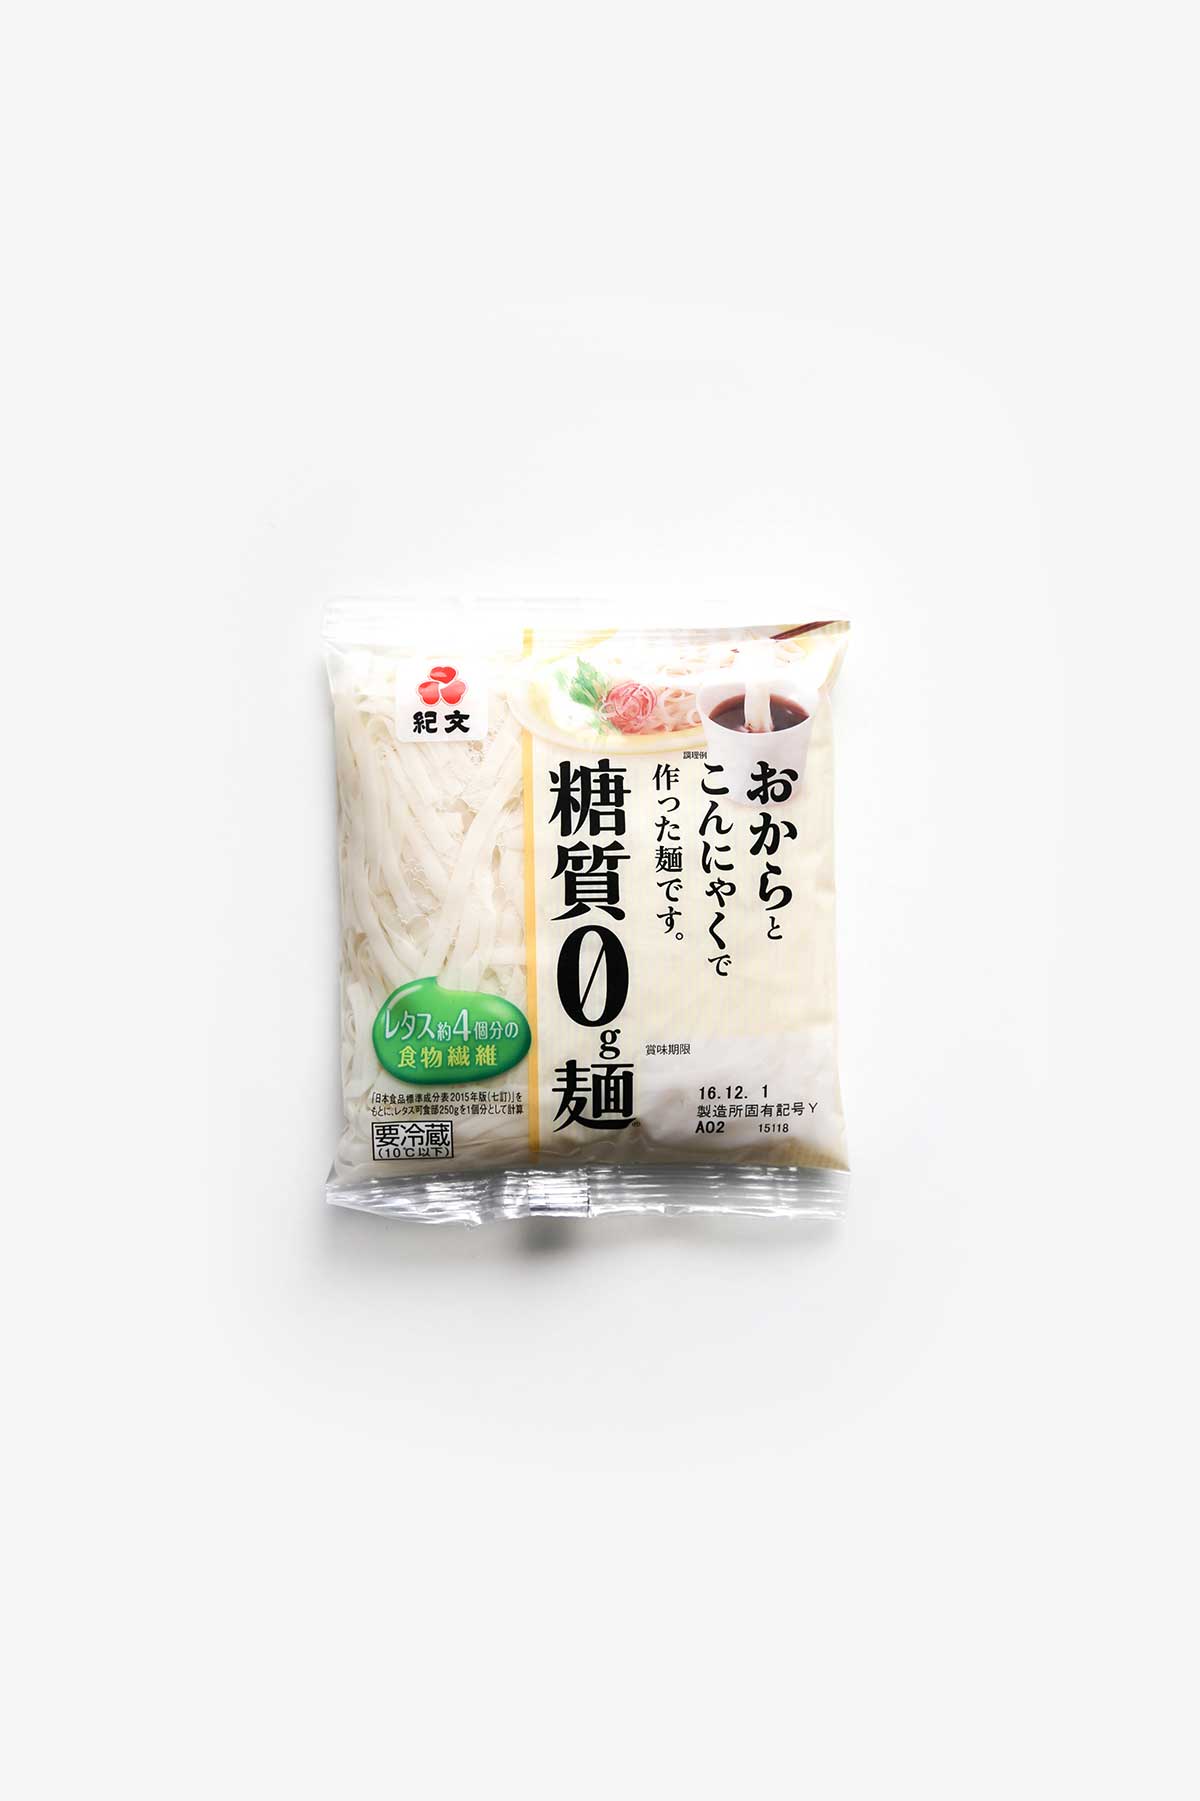 Shirataki Noodles and Keto in Japan, Konnyaku Low Carb Pasta